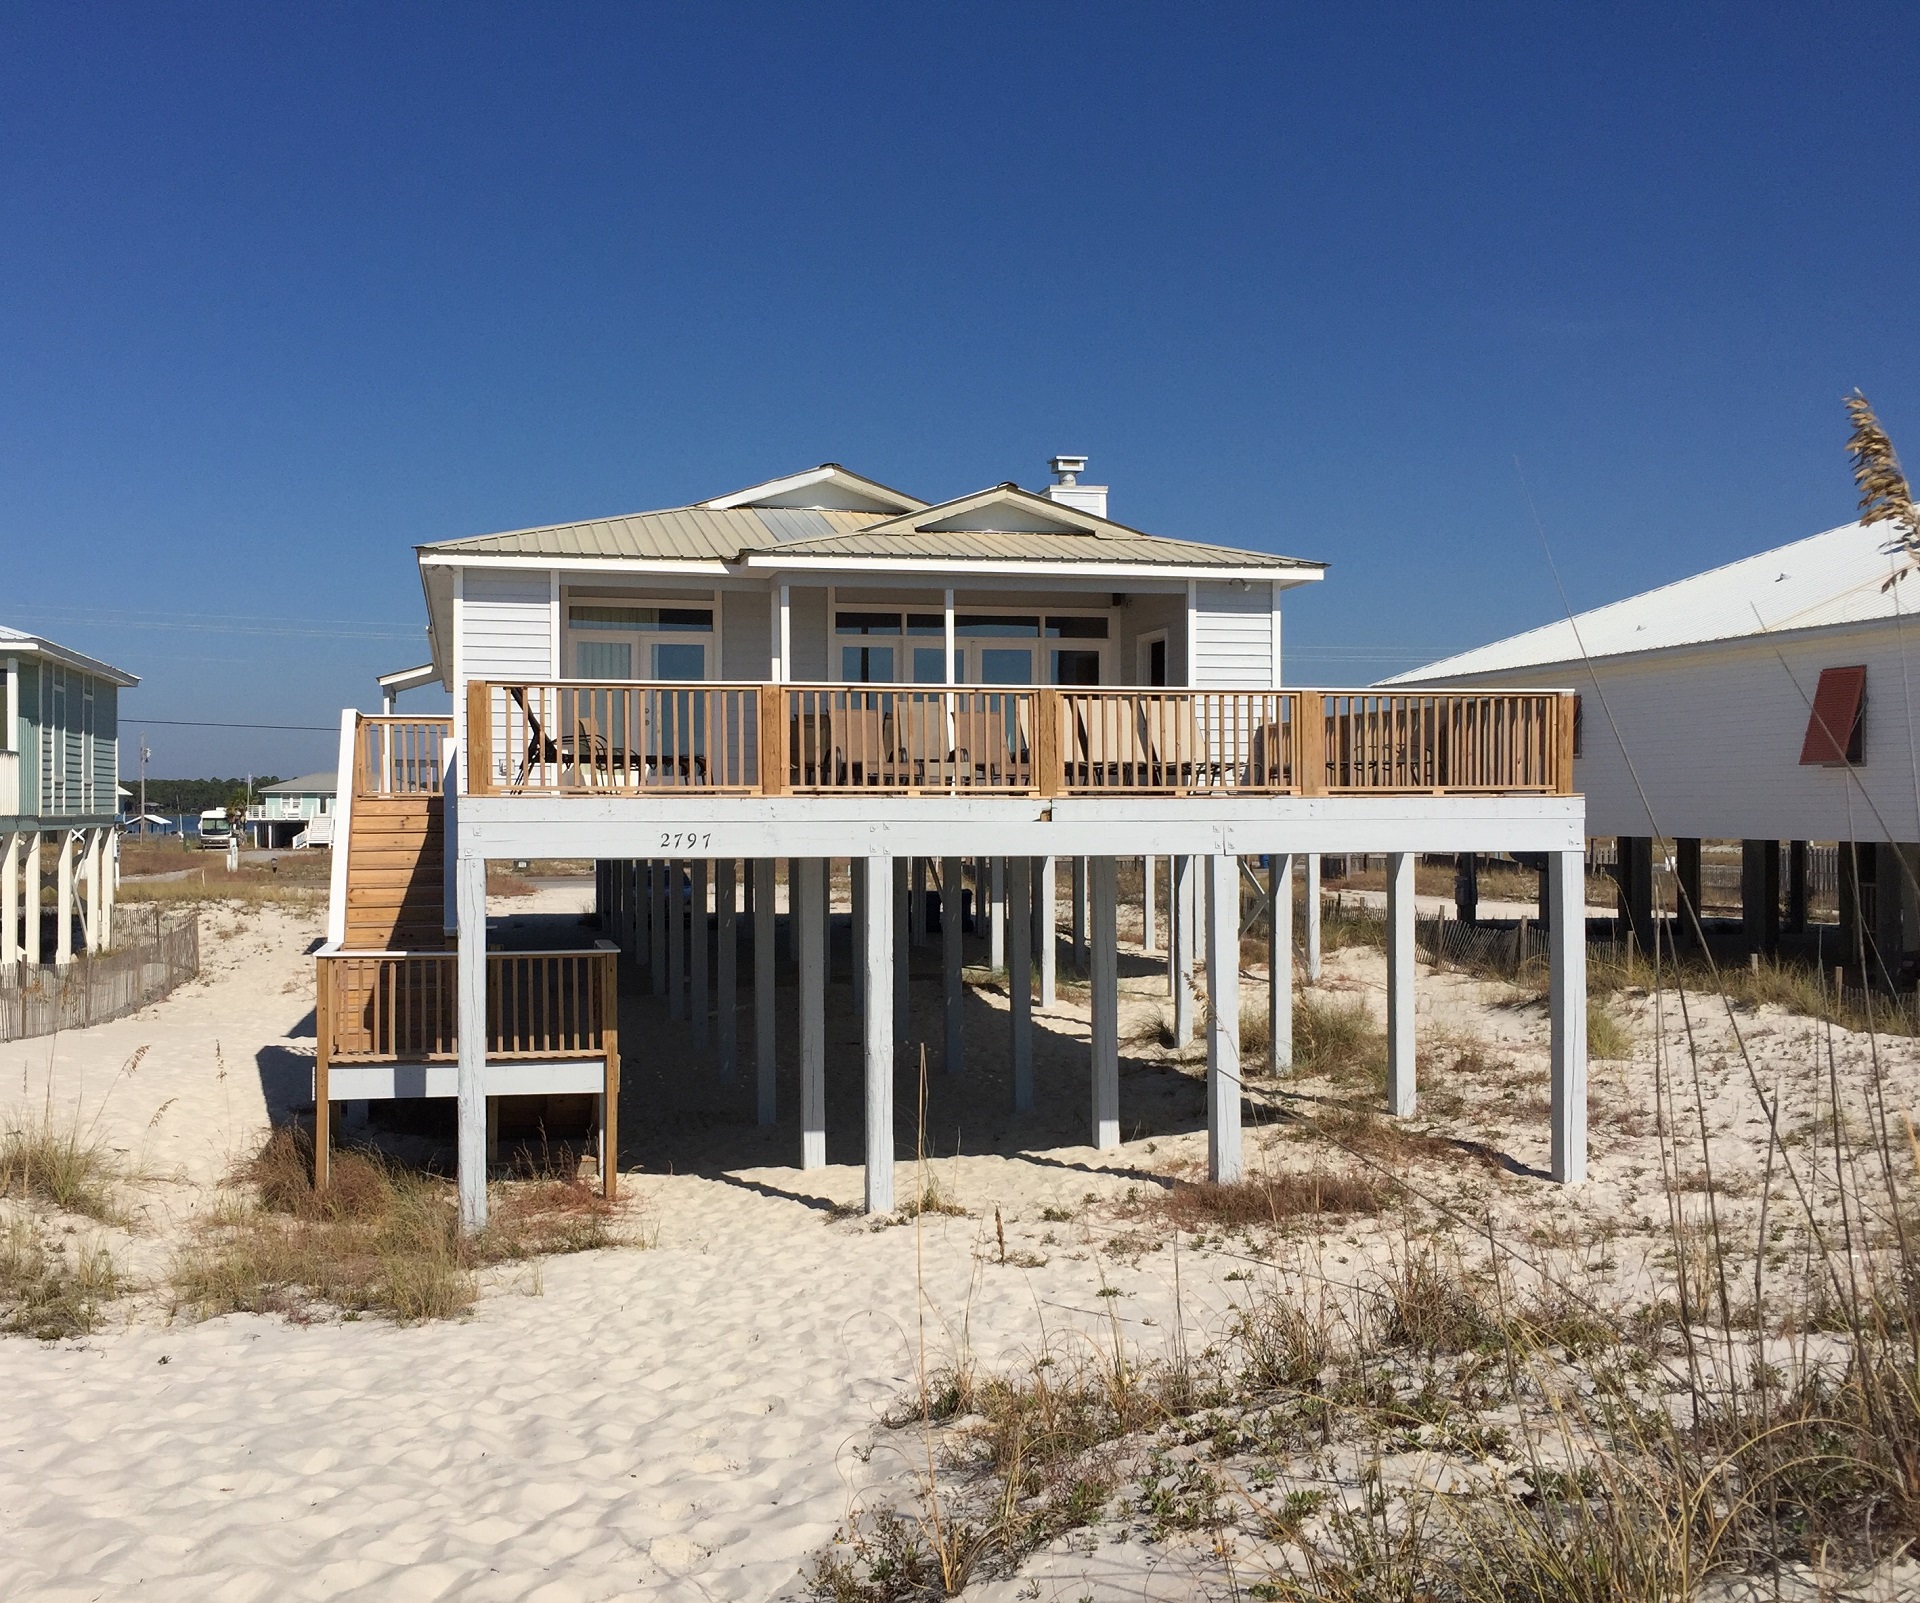 Gulf crews quarters front pool shores private alabama tripadvisor vacation rental